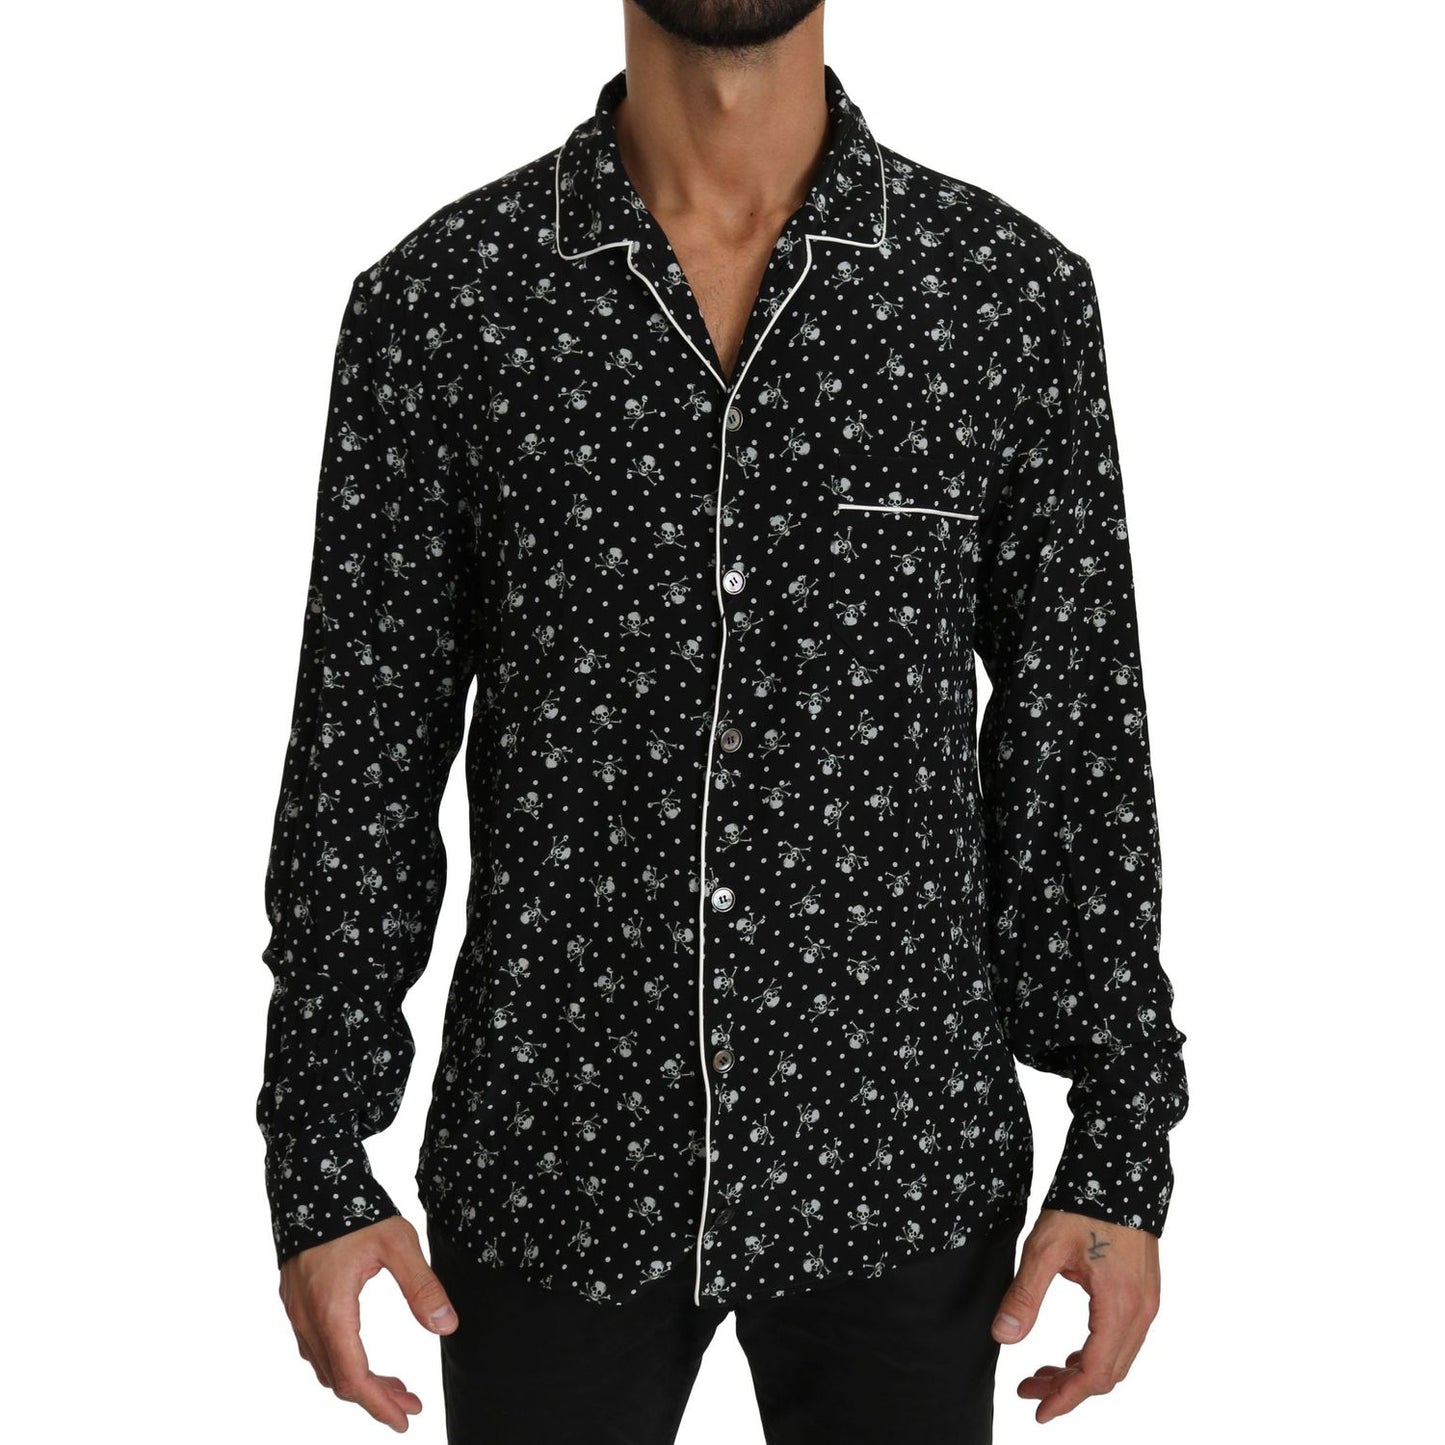 Dolce & Gabbana Elegant Silk Pajama Shirt with Skull Print black-skull-print-silk-sleepwear-shirt IMG_0786-scaled-df65f11f-8c3.jpg